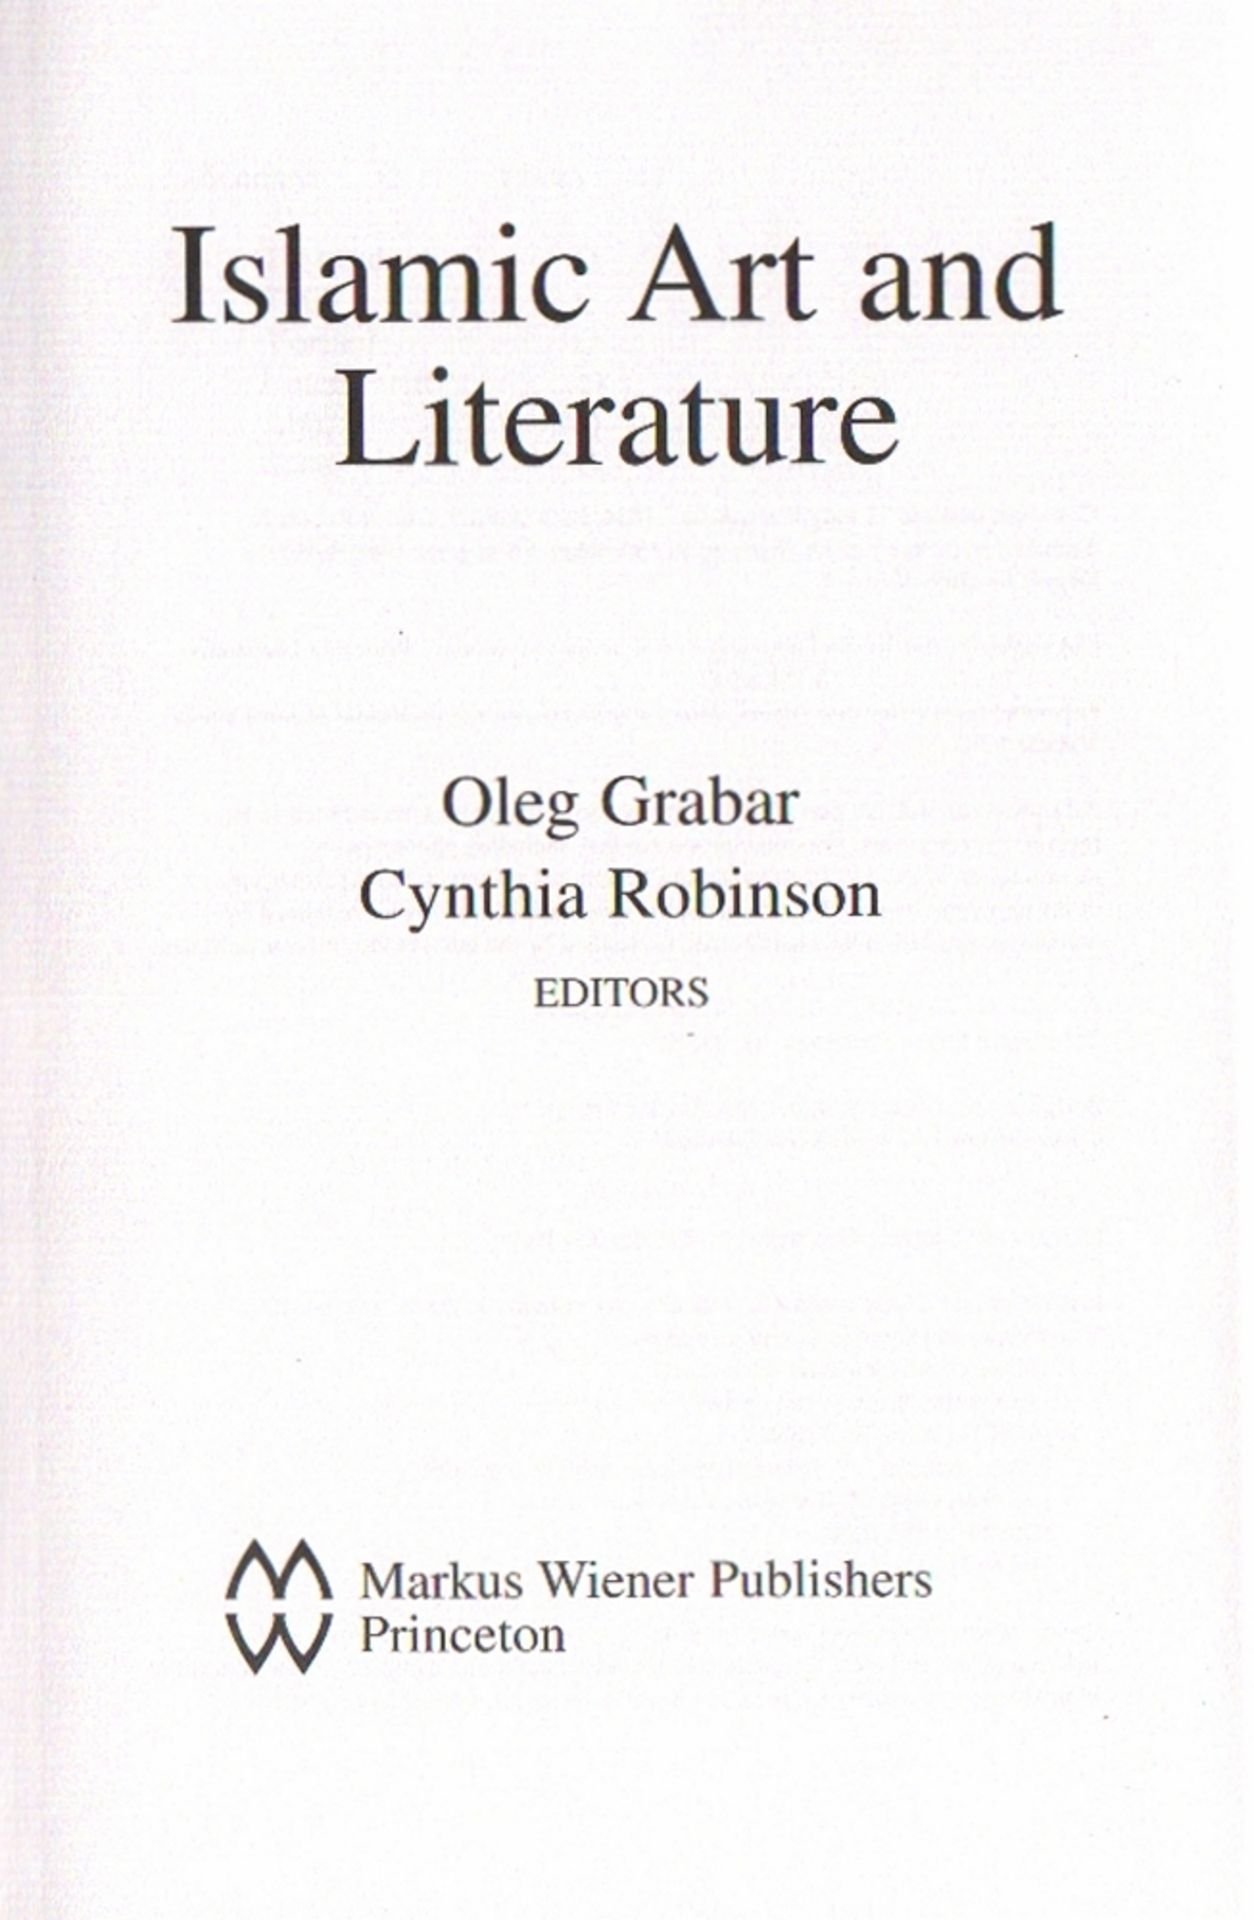 Islamistik. Grabar, Oleg & Cynthia Robinson. Islamic Art and Literature. Princeton, Wiener, 2001.